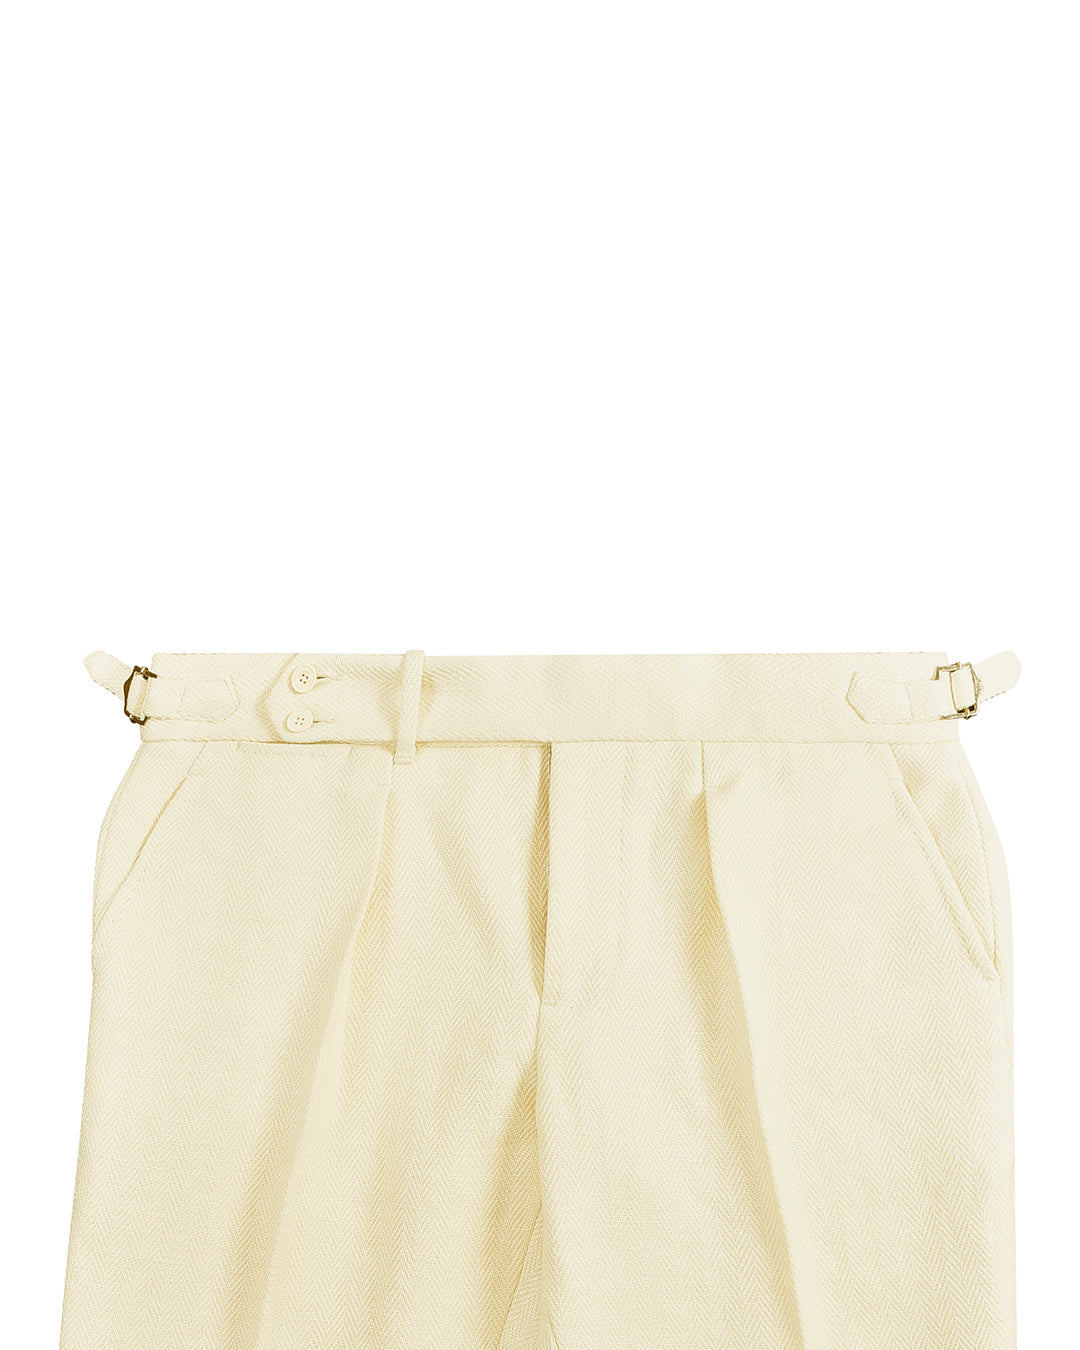 Front view of custom linen pants for men by Luxire in cream herringbone